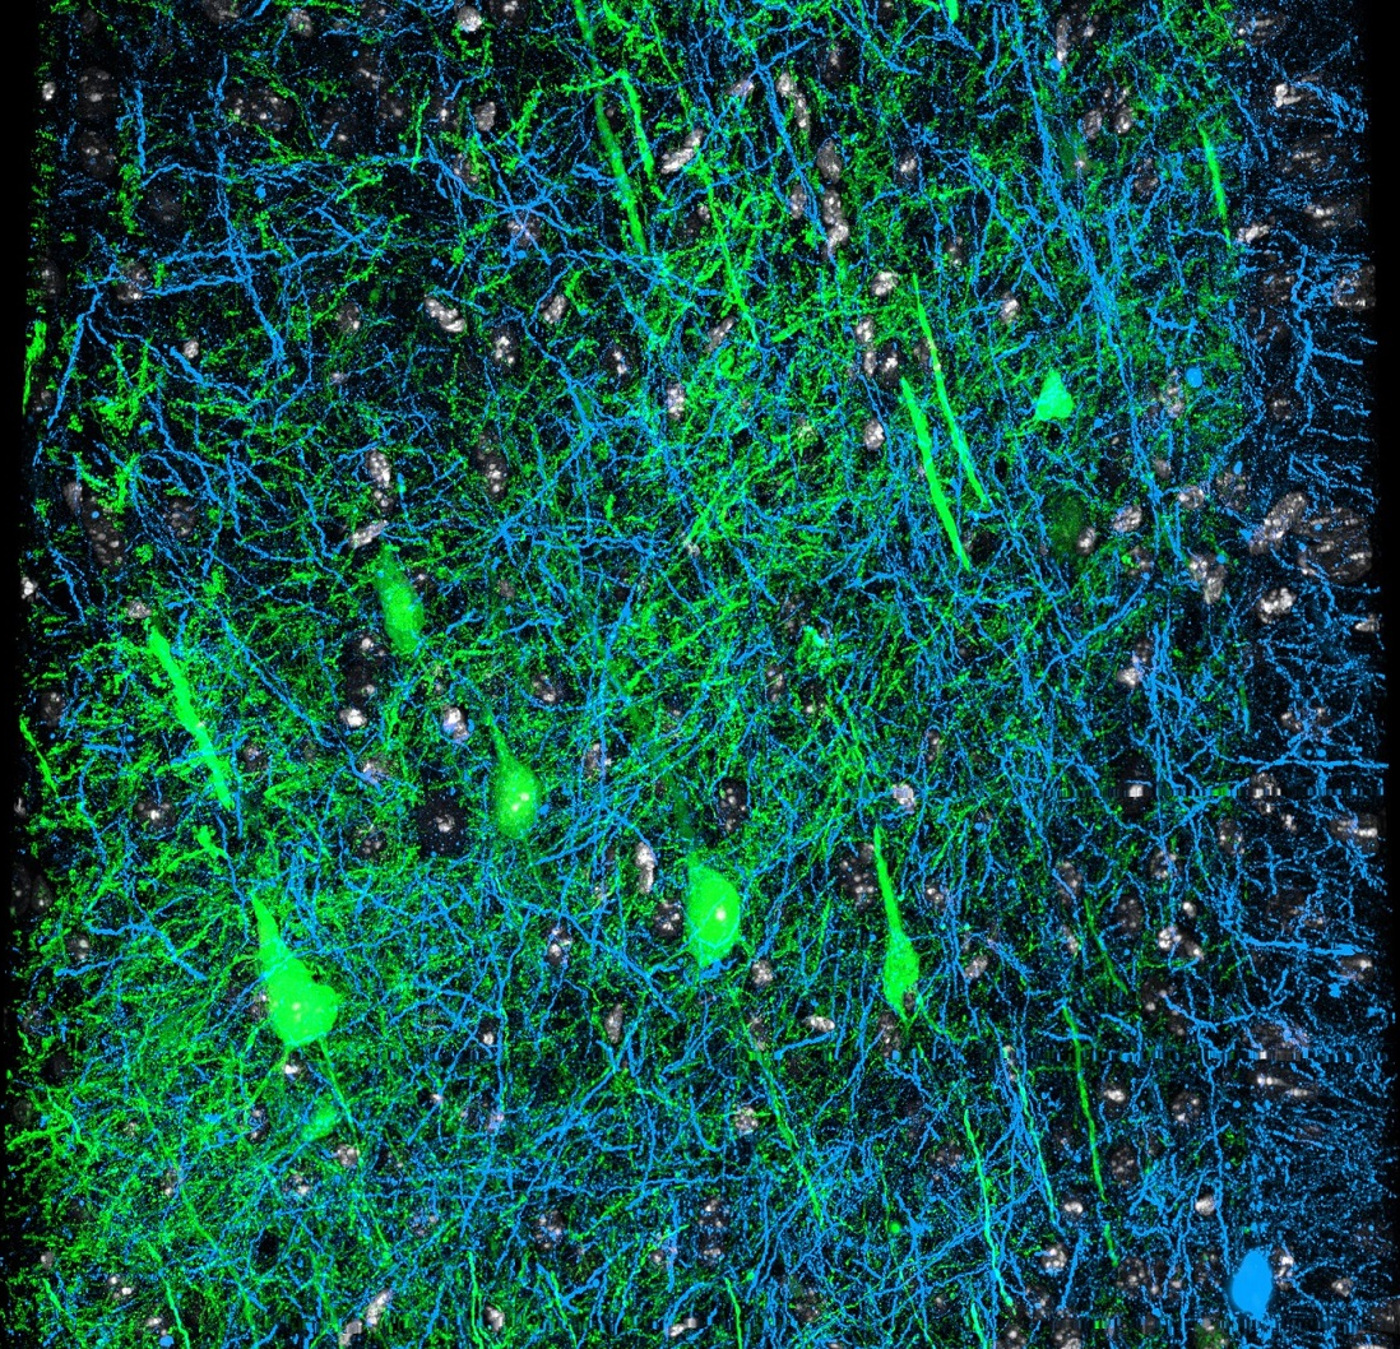 Les neurones pyramidaux, en vert, sont présents dans le néocortex. © Dan O'Shea, Flickr, CC by-nc-sa 2.0